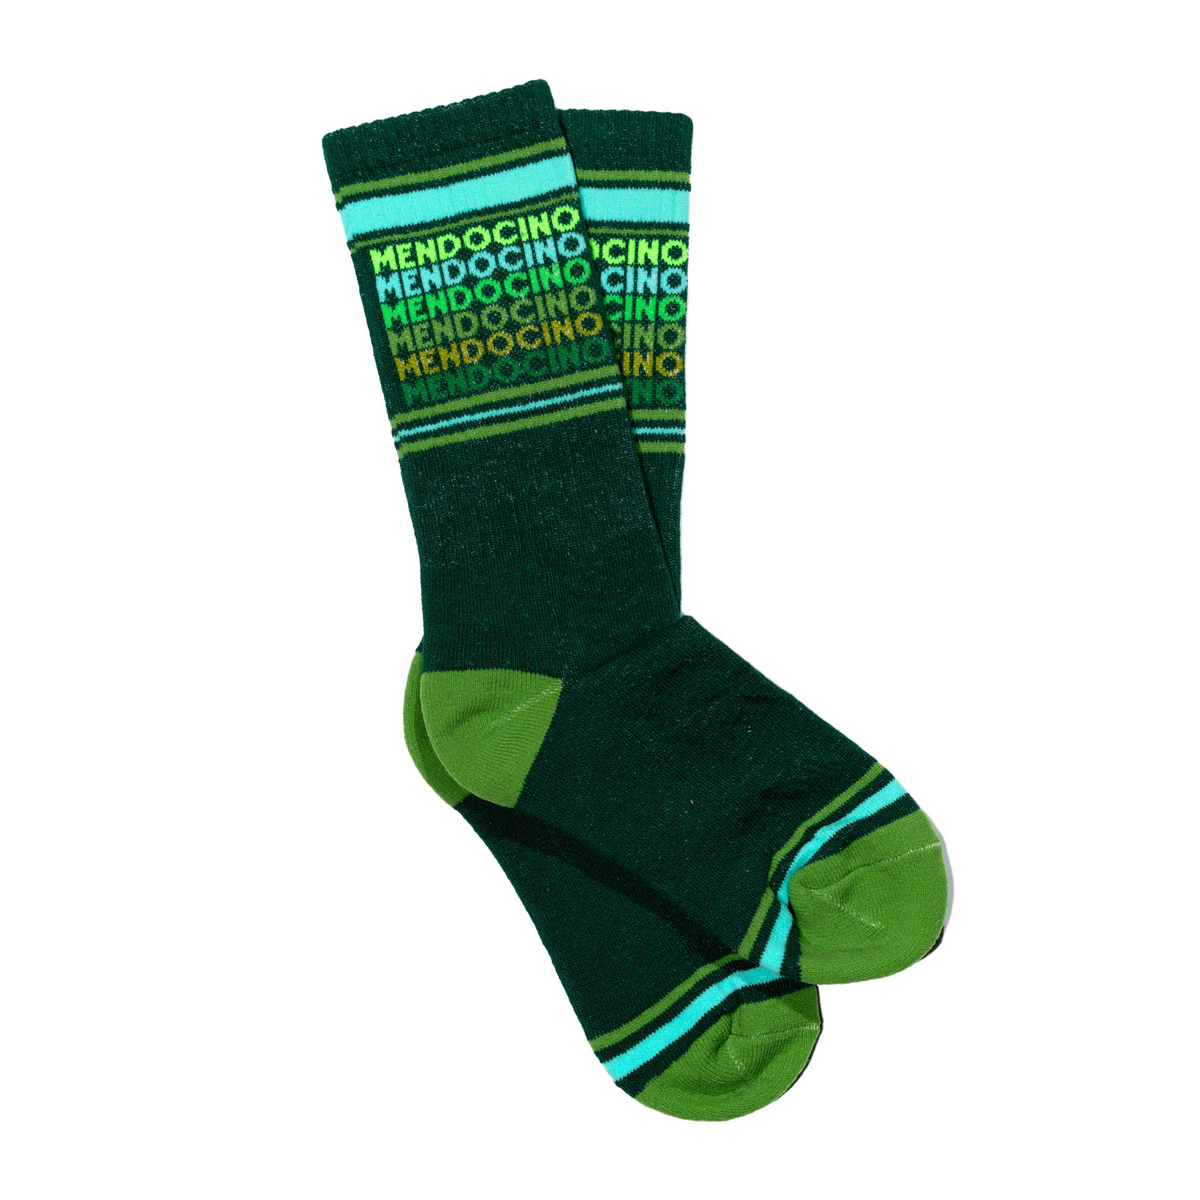 Gumball Poodle Mendocino women&#39;s and men&#39;s sock featuring &quot;Mendocino&quot; in green gradients on green sock on display foot